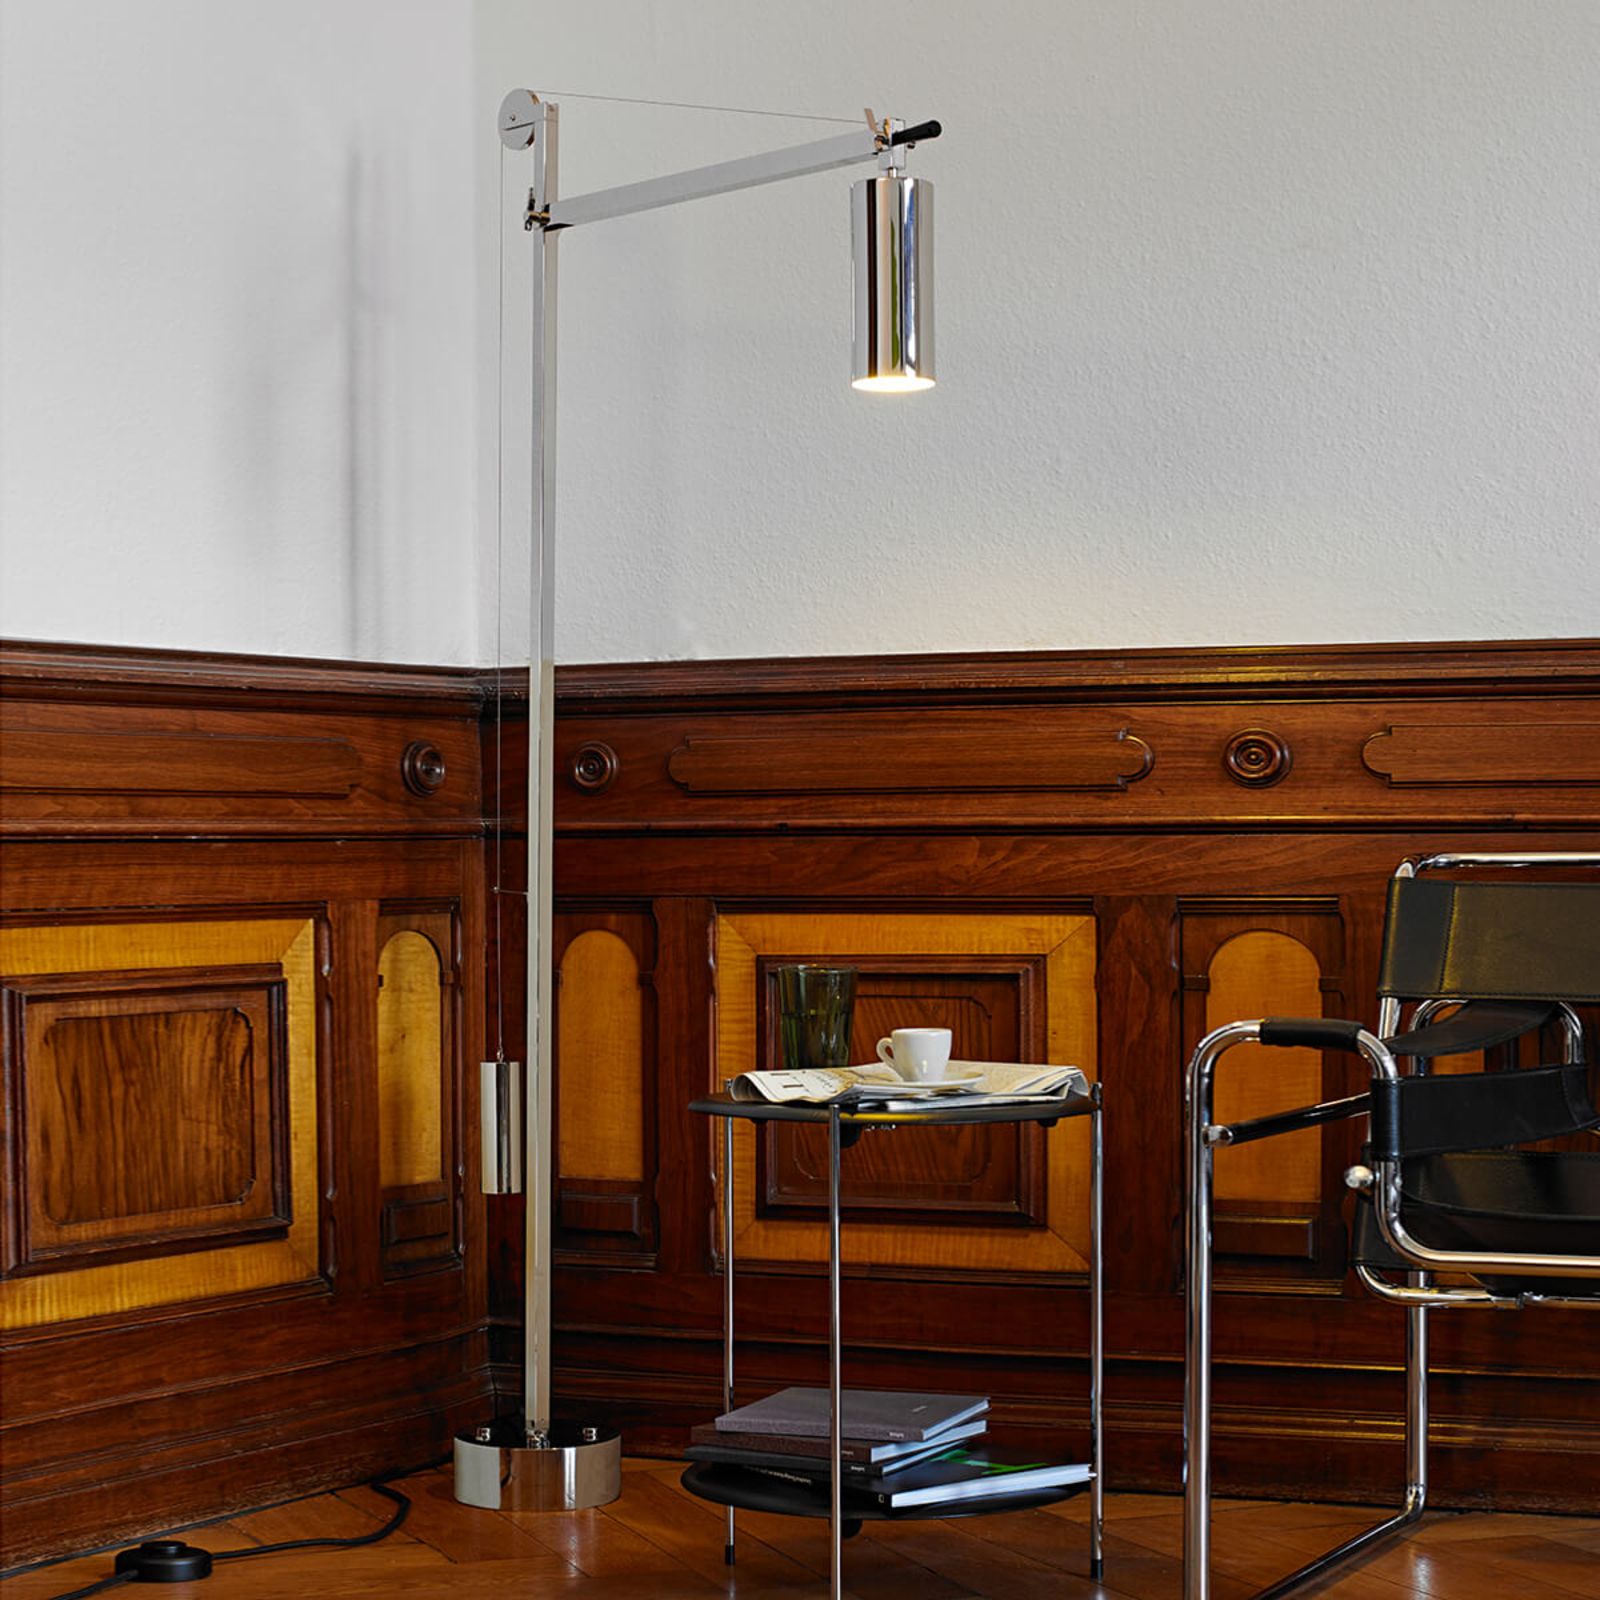 Tecnolumen Umkreis floor lamp in the Bauhaus style